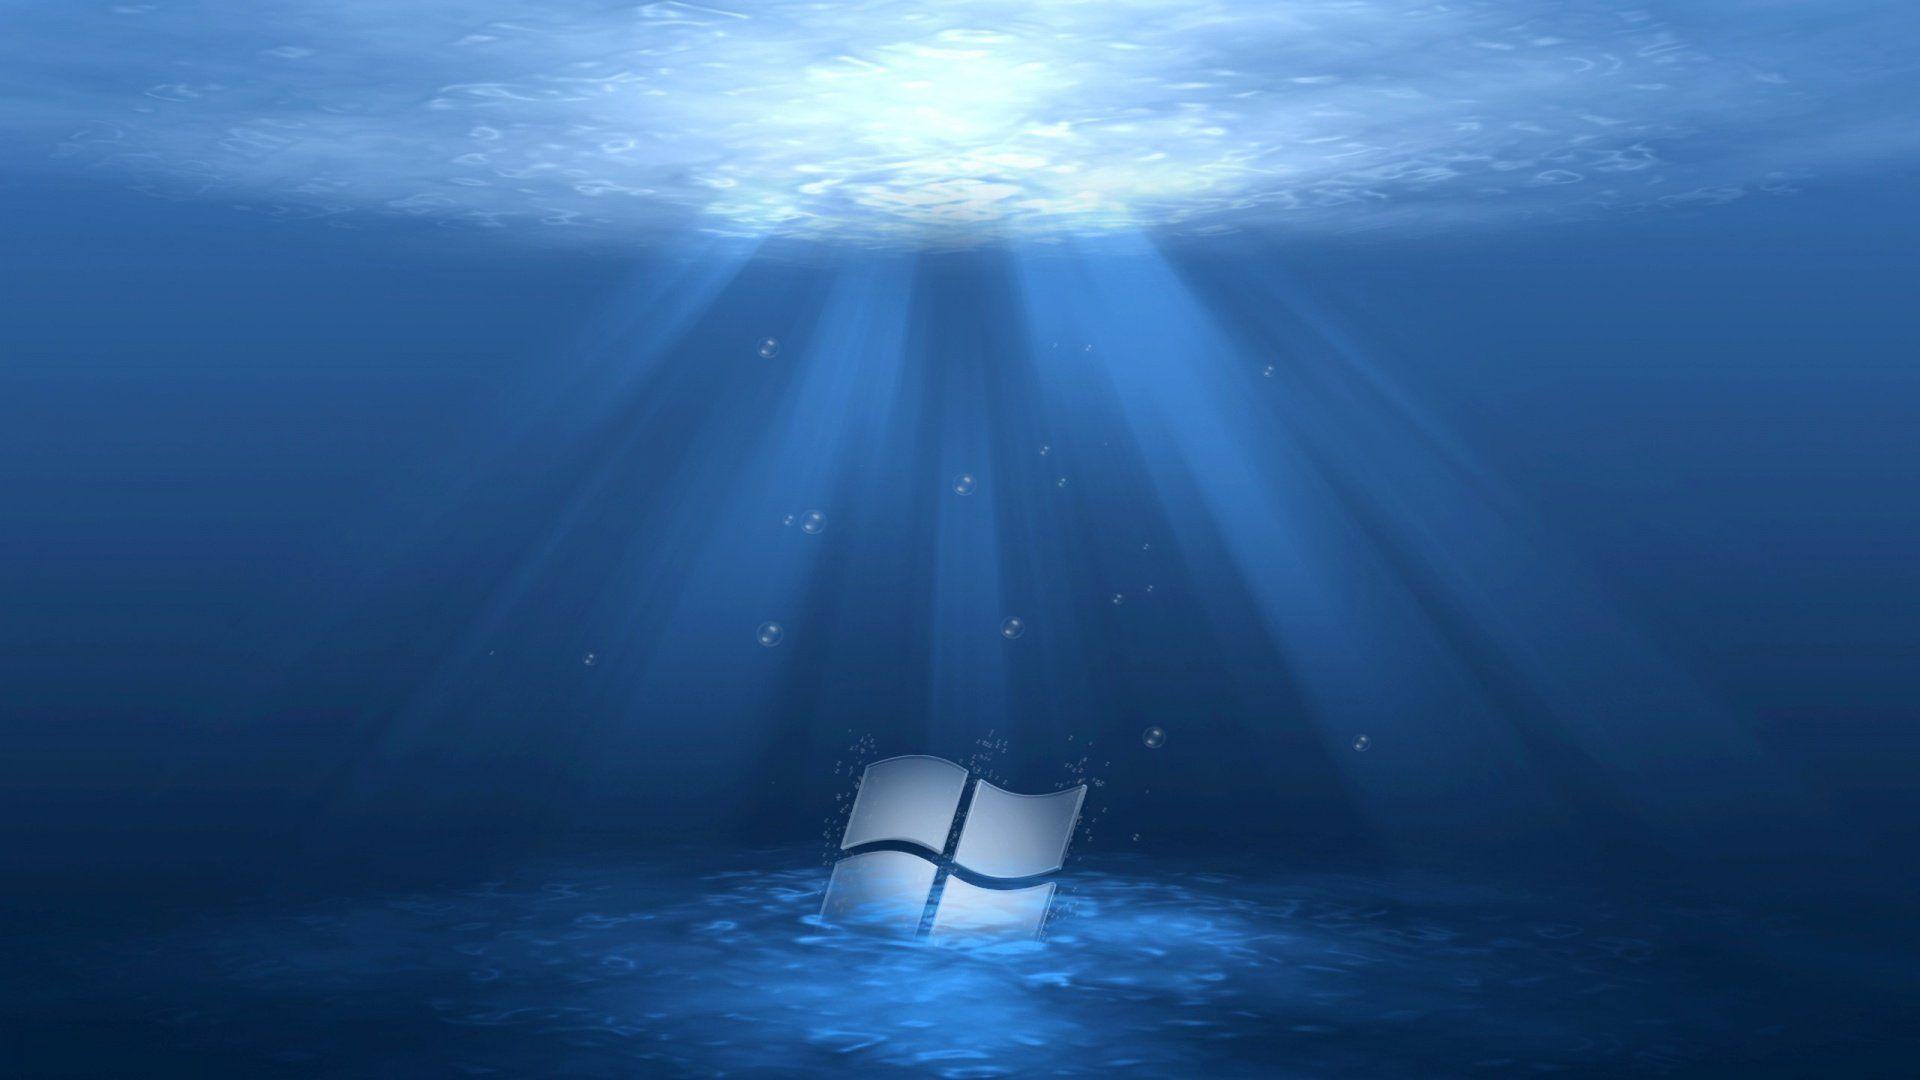 windows server 2012 iso image